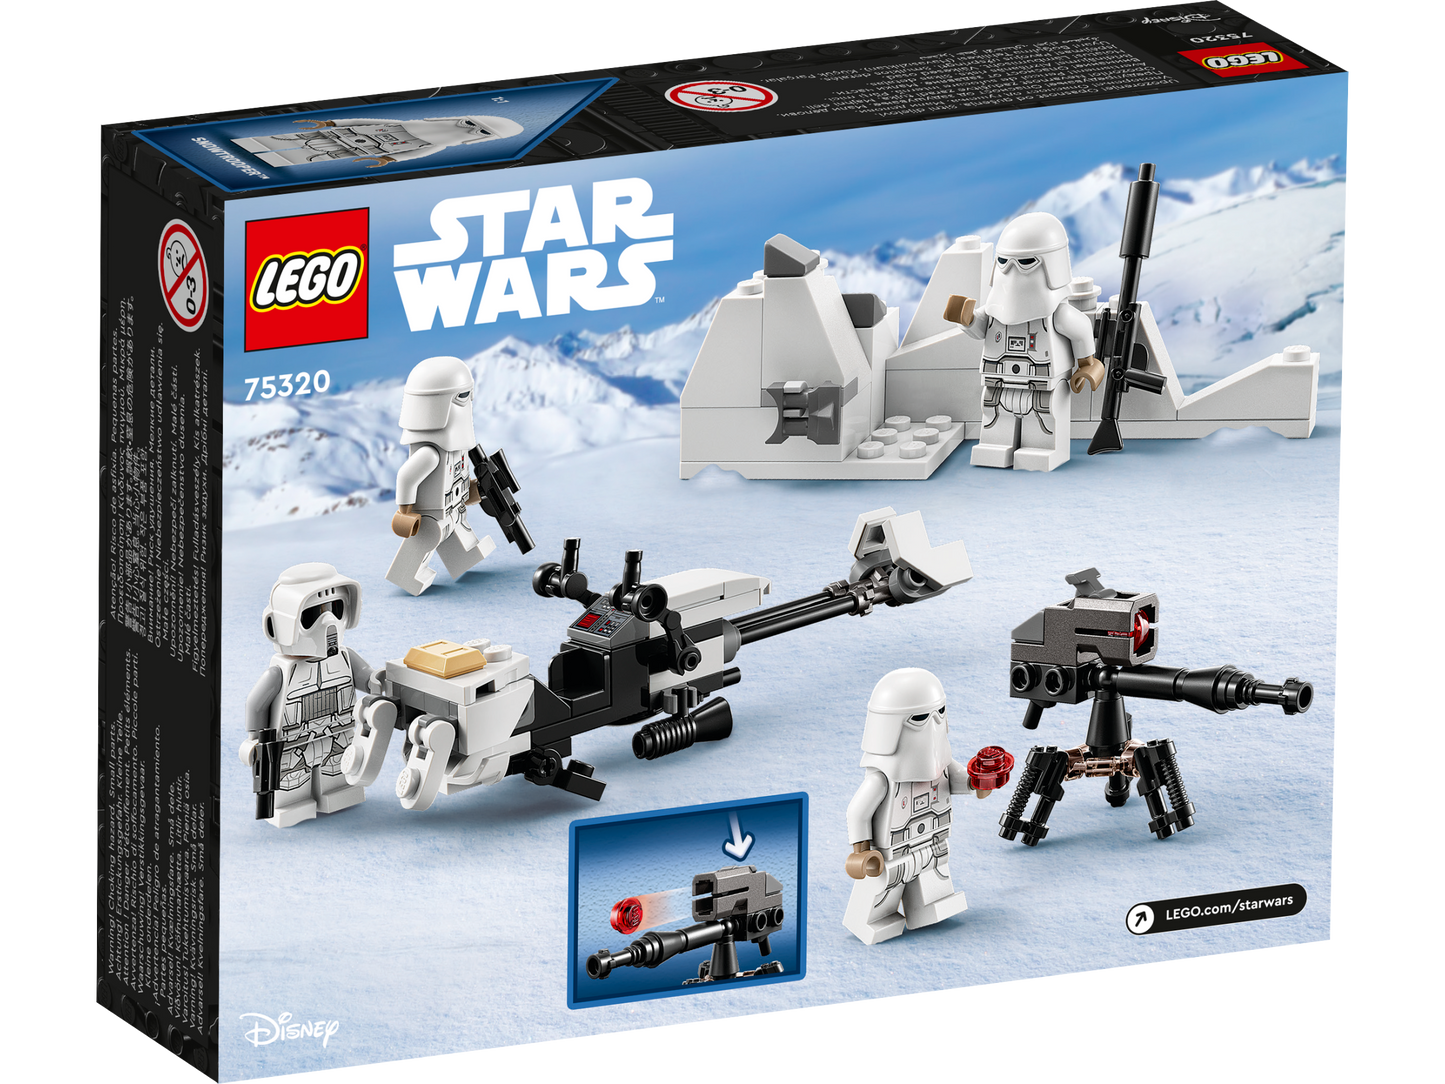 LEGO® Star Wars 75320 Snowtrooper™ Battle Pack